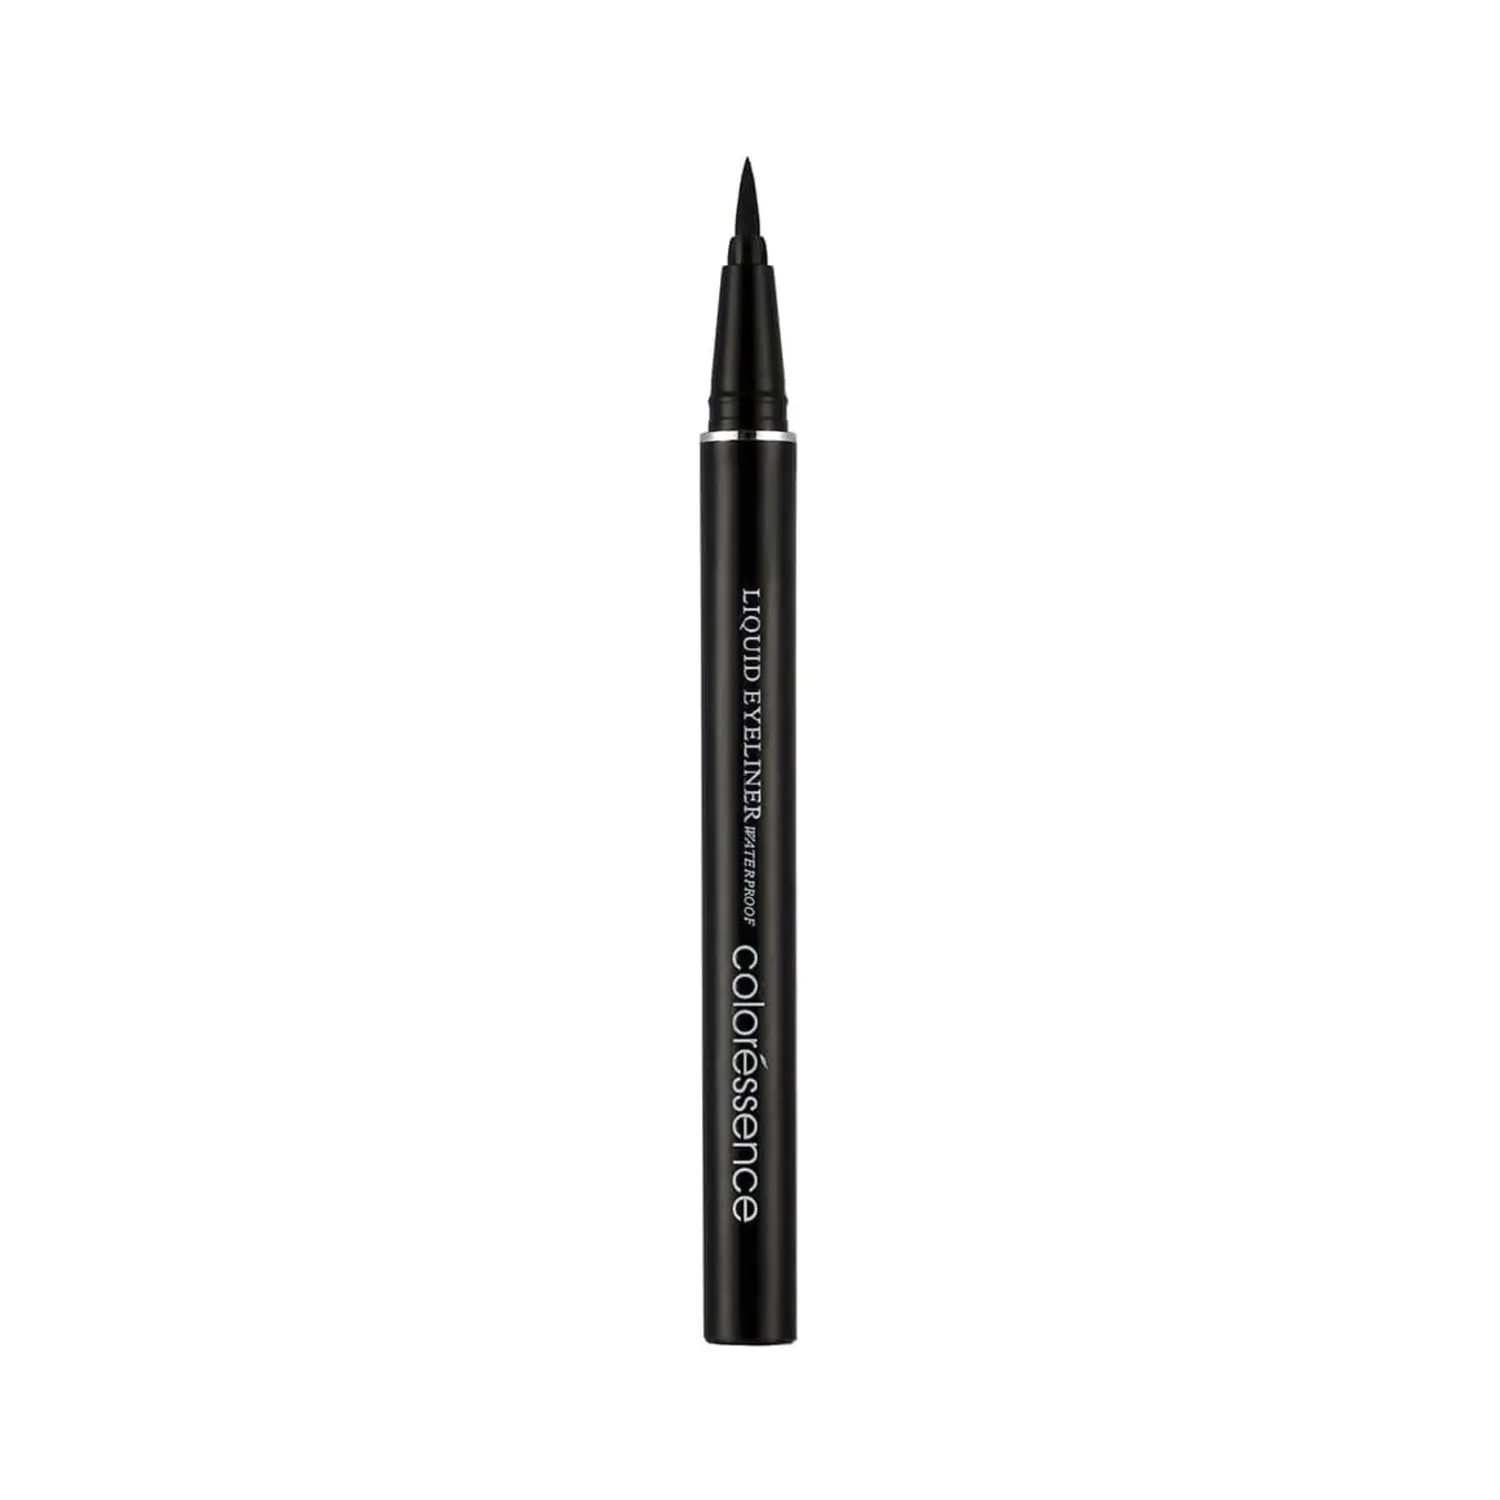 Coloressence Ink Stylo Eyeliner Sketch Pen Style Waterproof Long Lasting Formula - Black (1g)